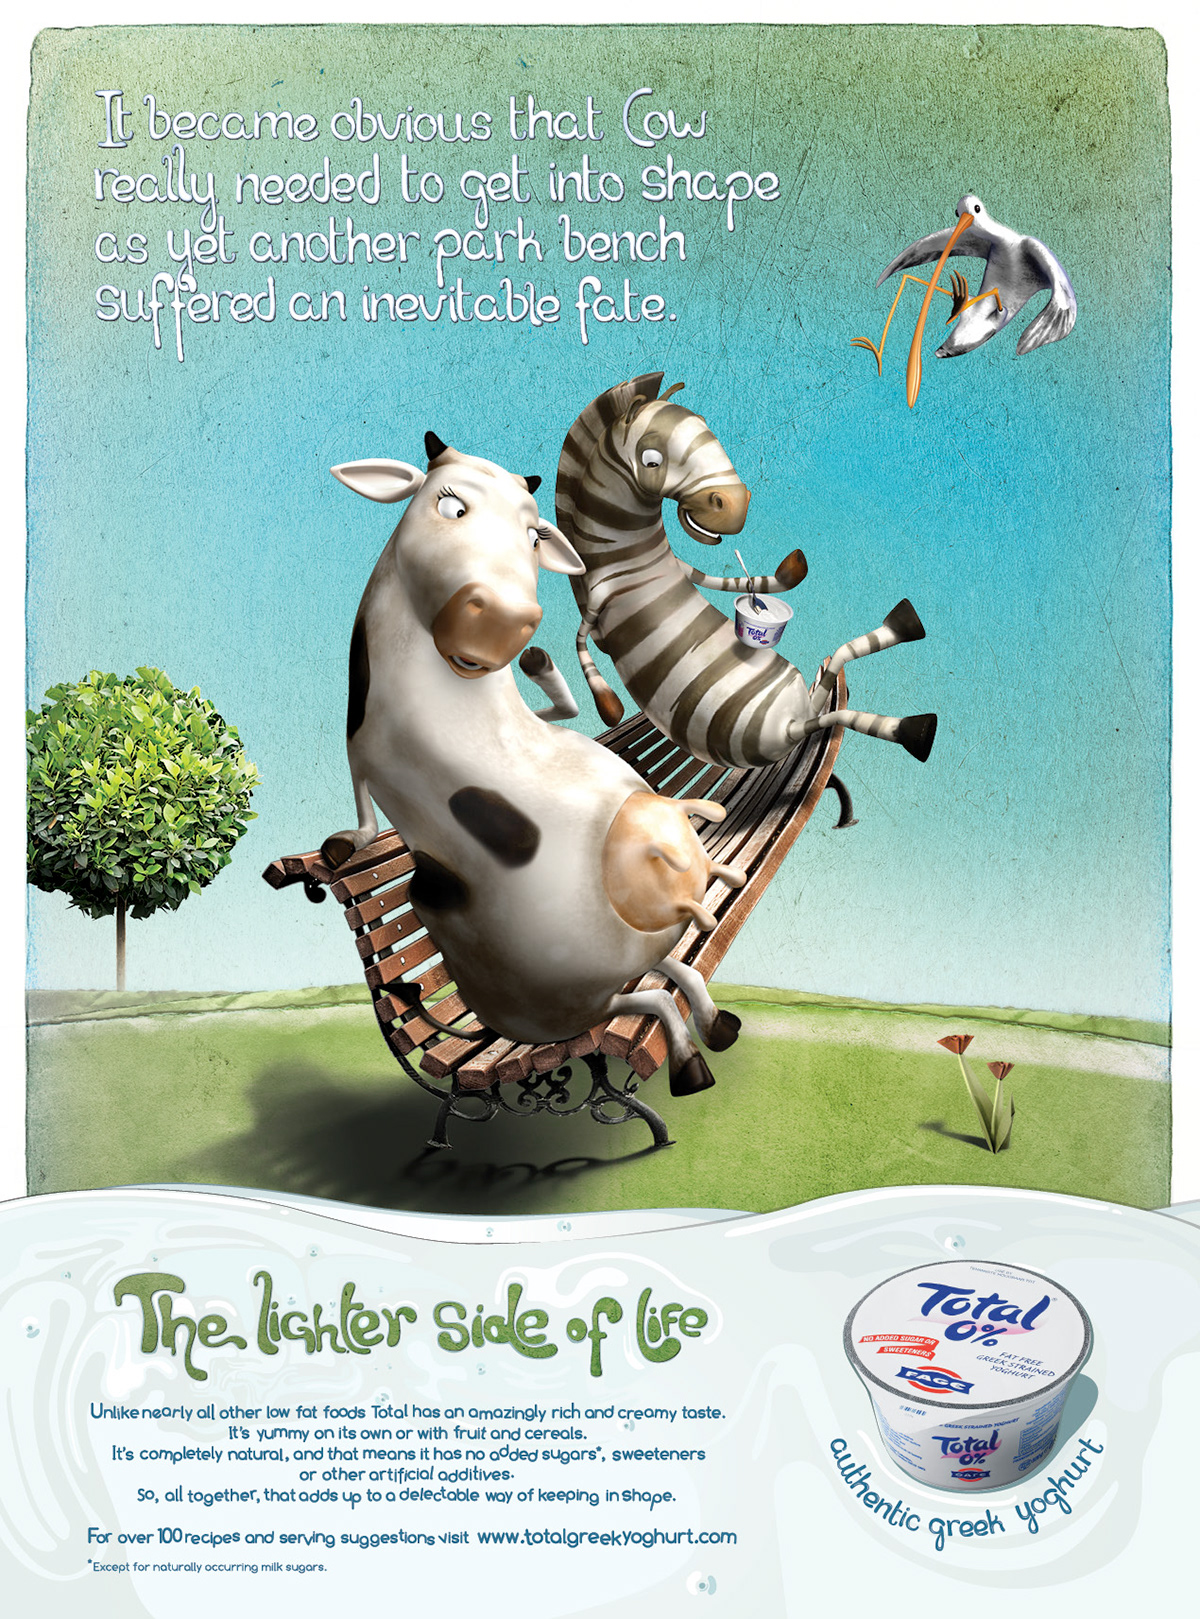 FMCG yoghurt cow and zebra total